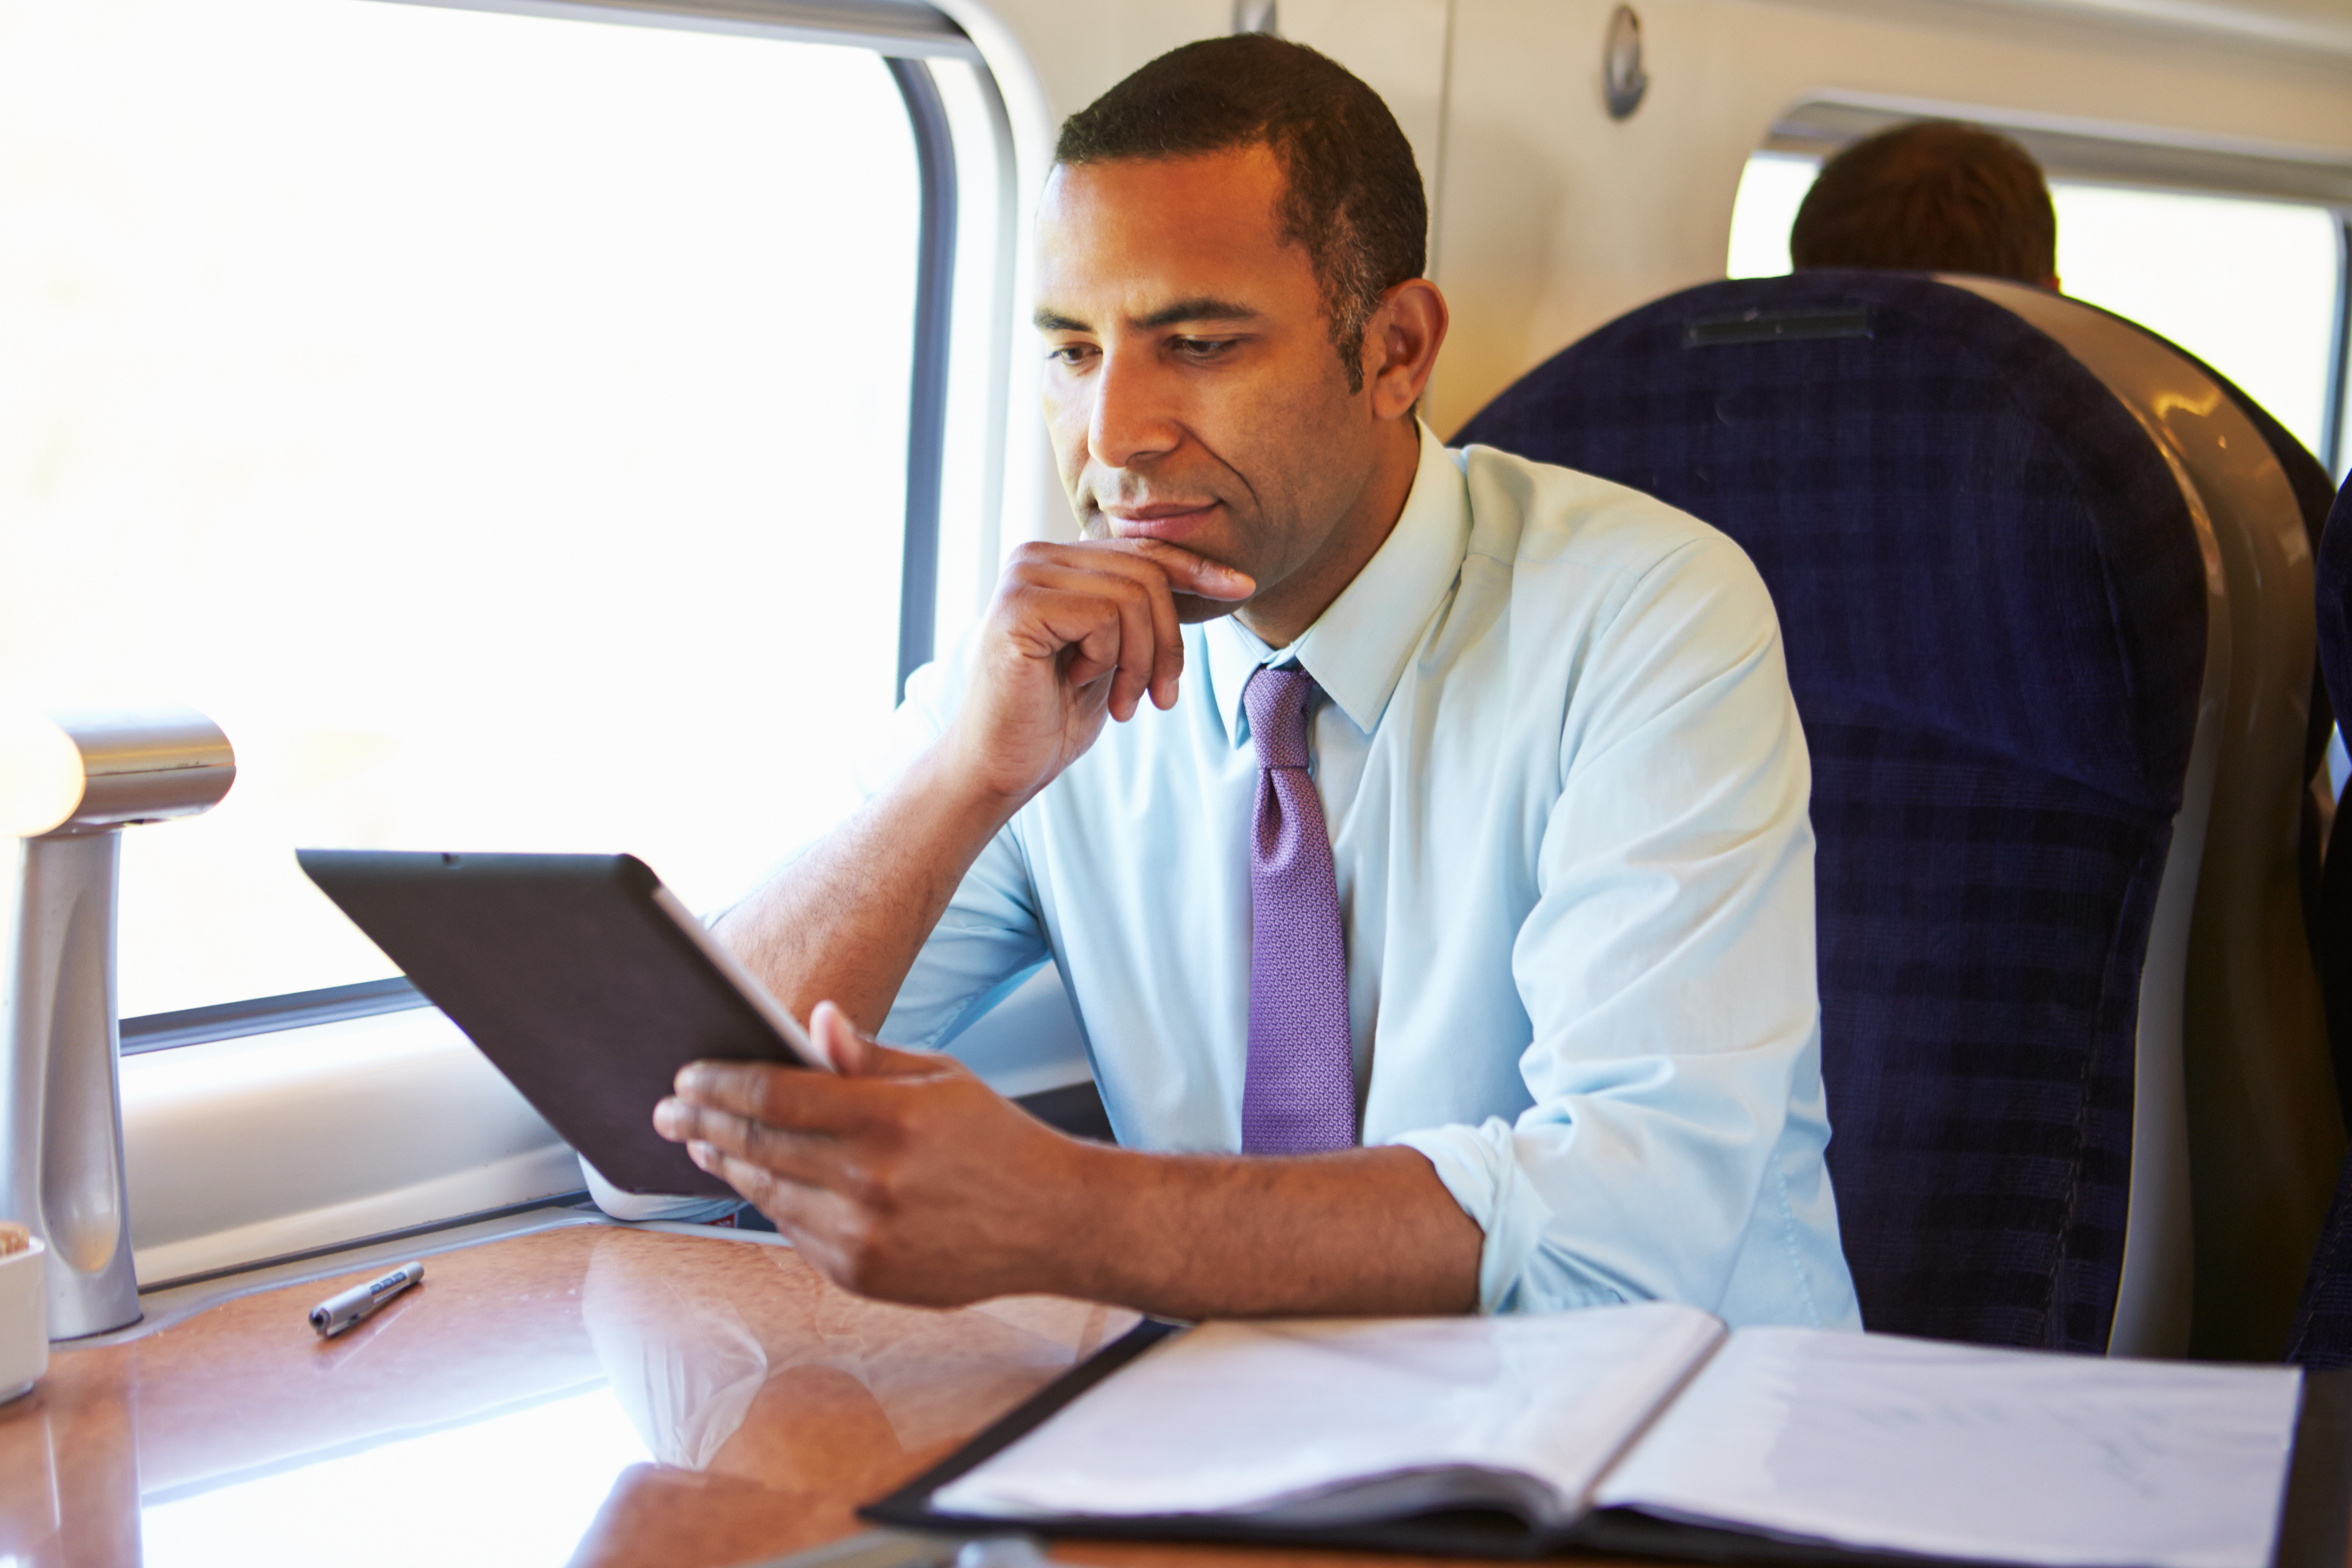 A man sitting in a window-seat on a train | Source: Shutterstock